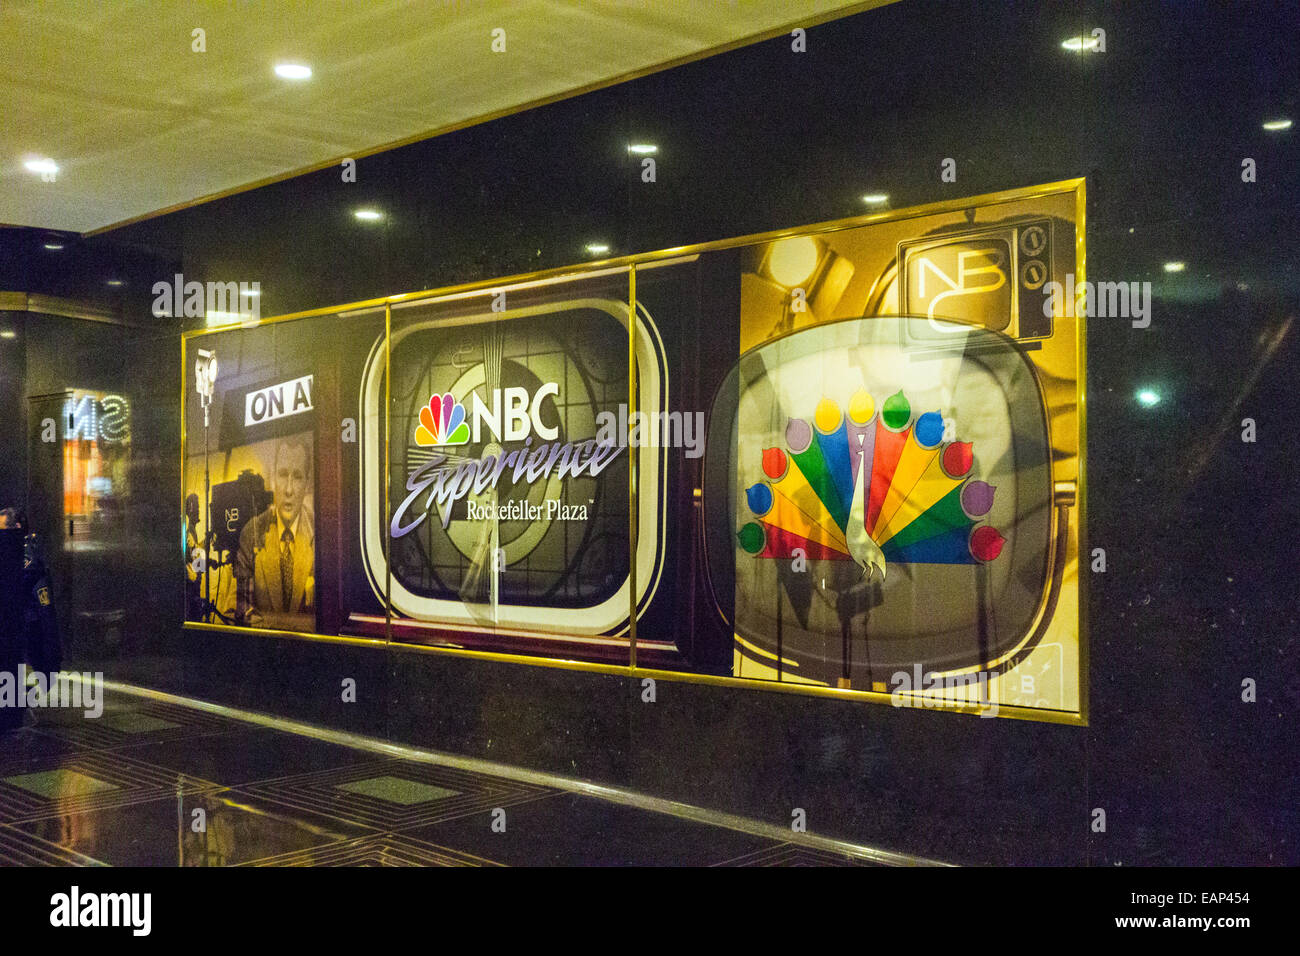 NBC universal experience in Rockefeller center Stock Photo